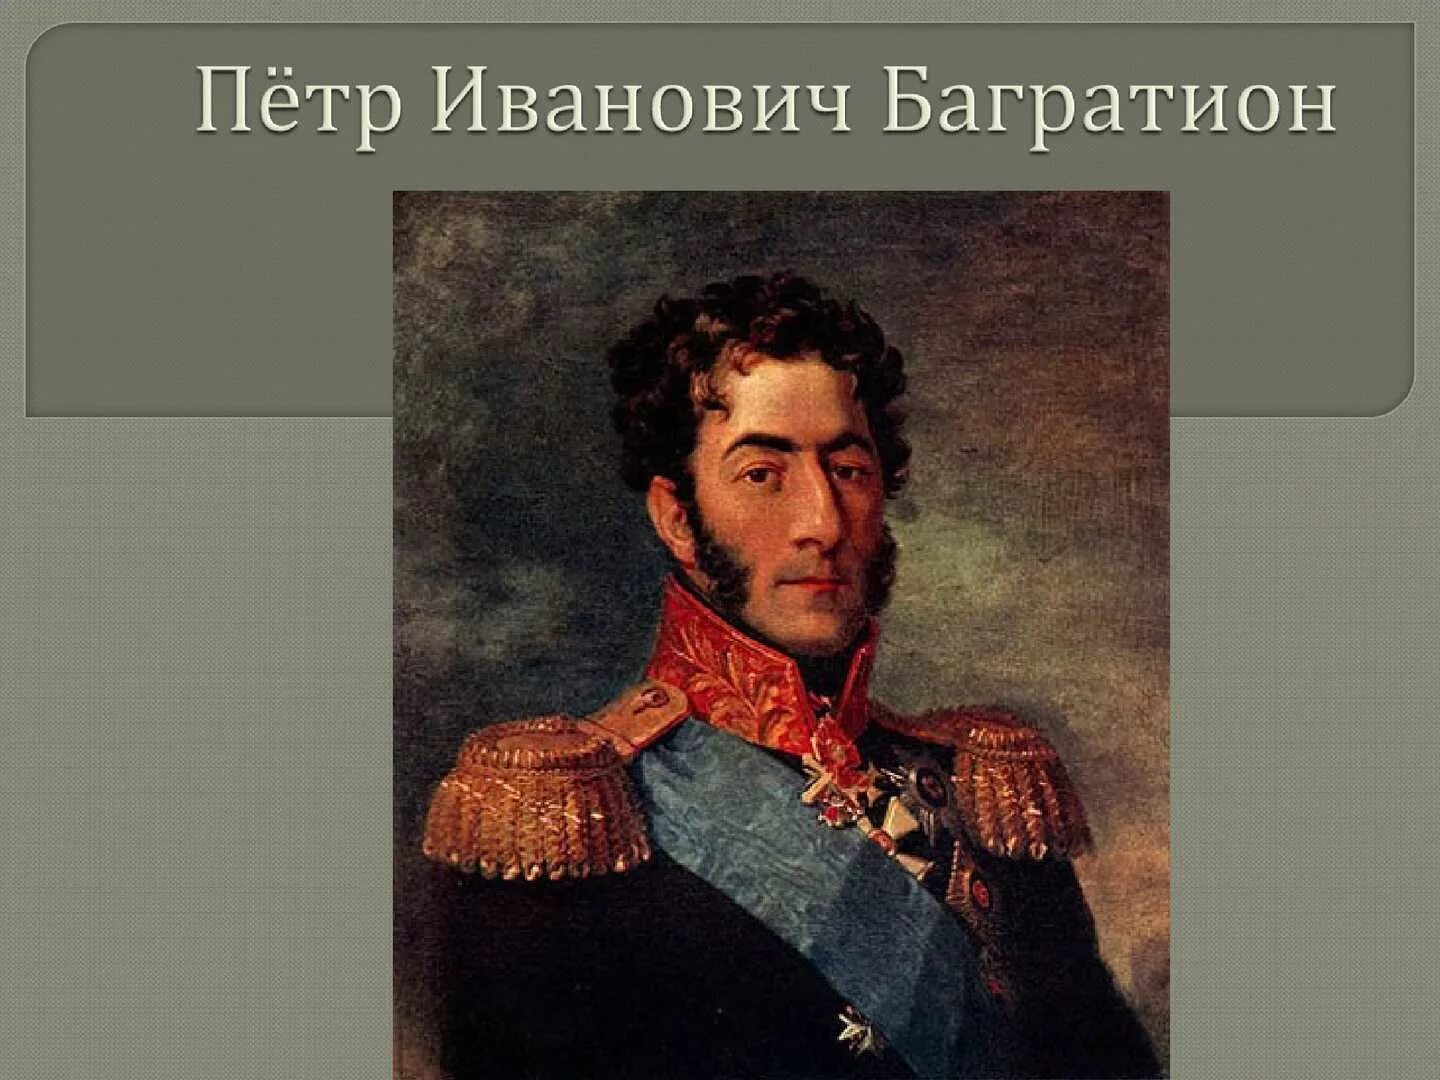 Багратион самое главное. Портрет Багратиона Петра Ивановича.